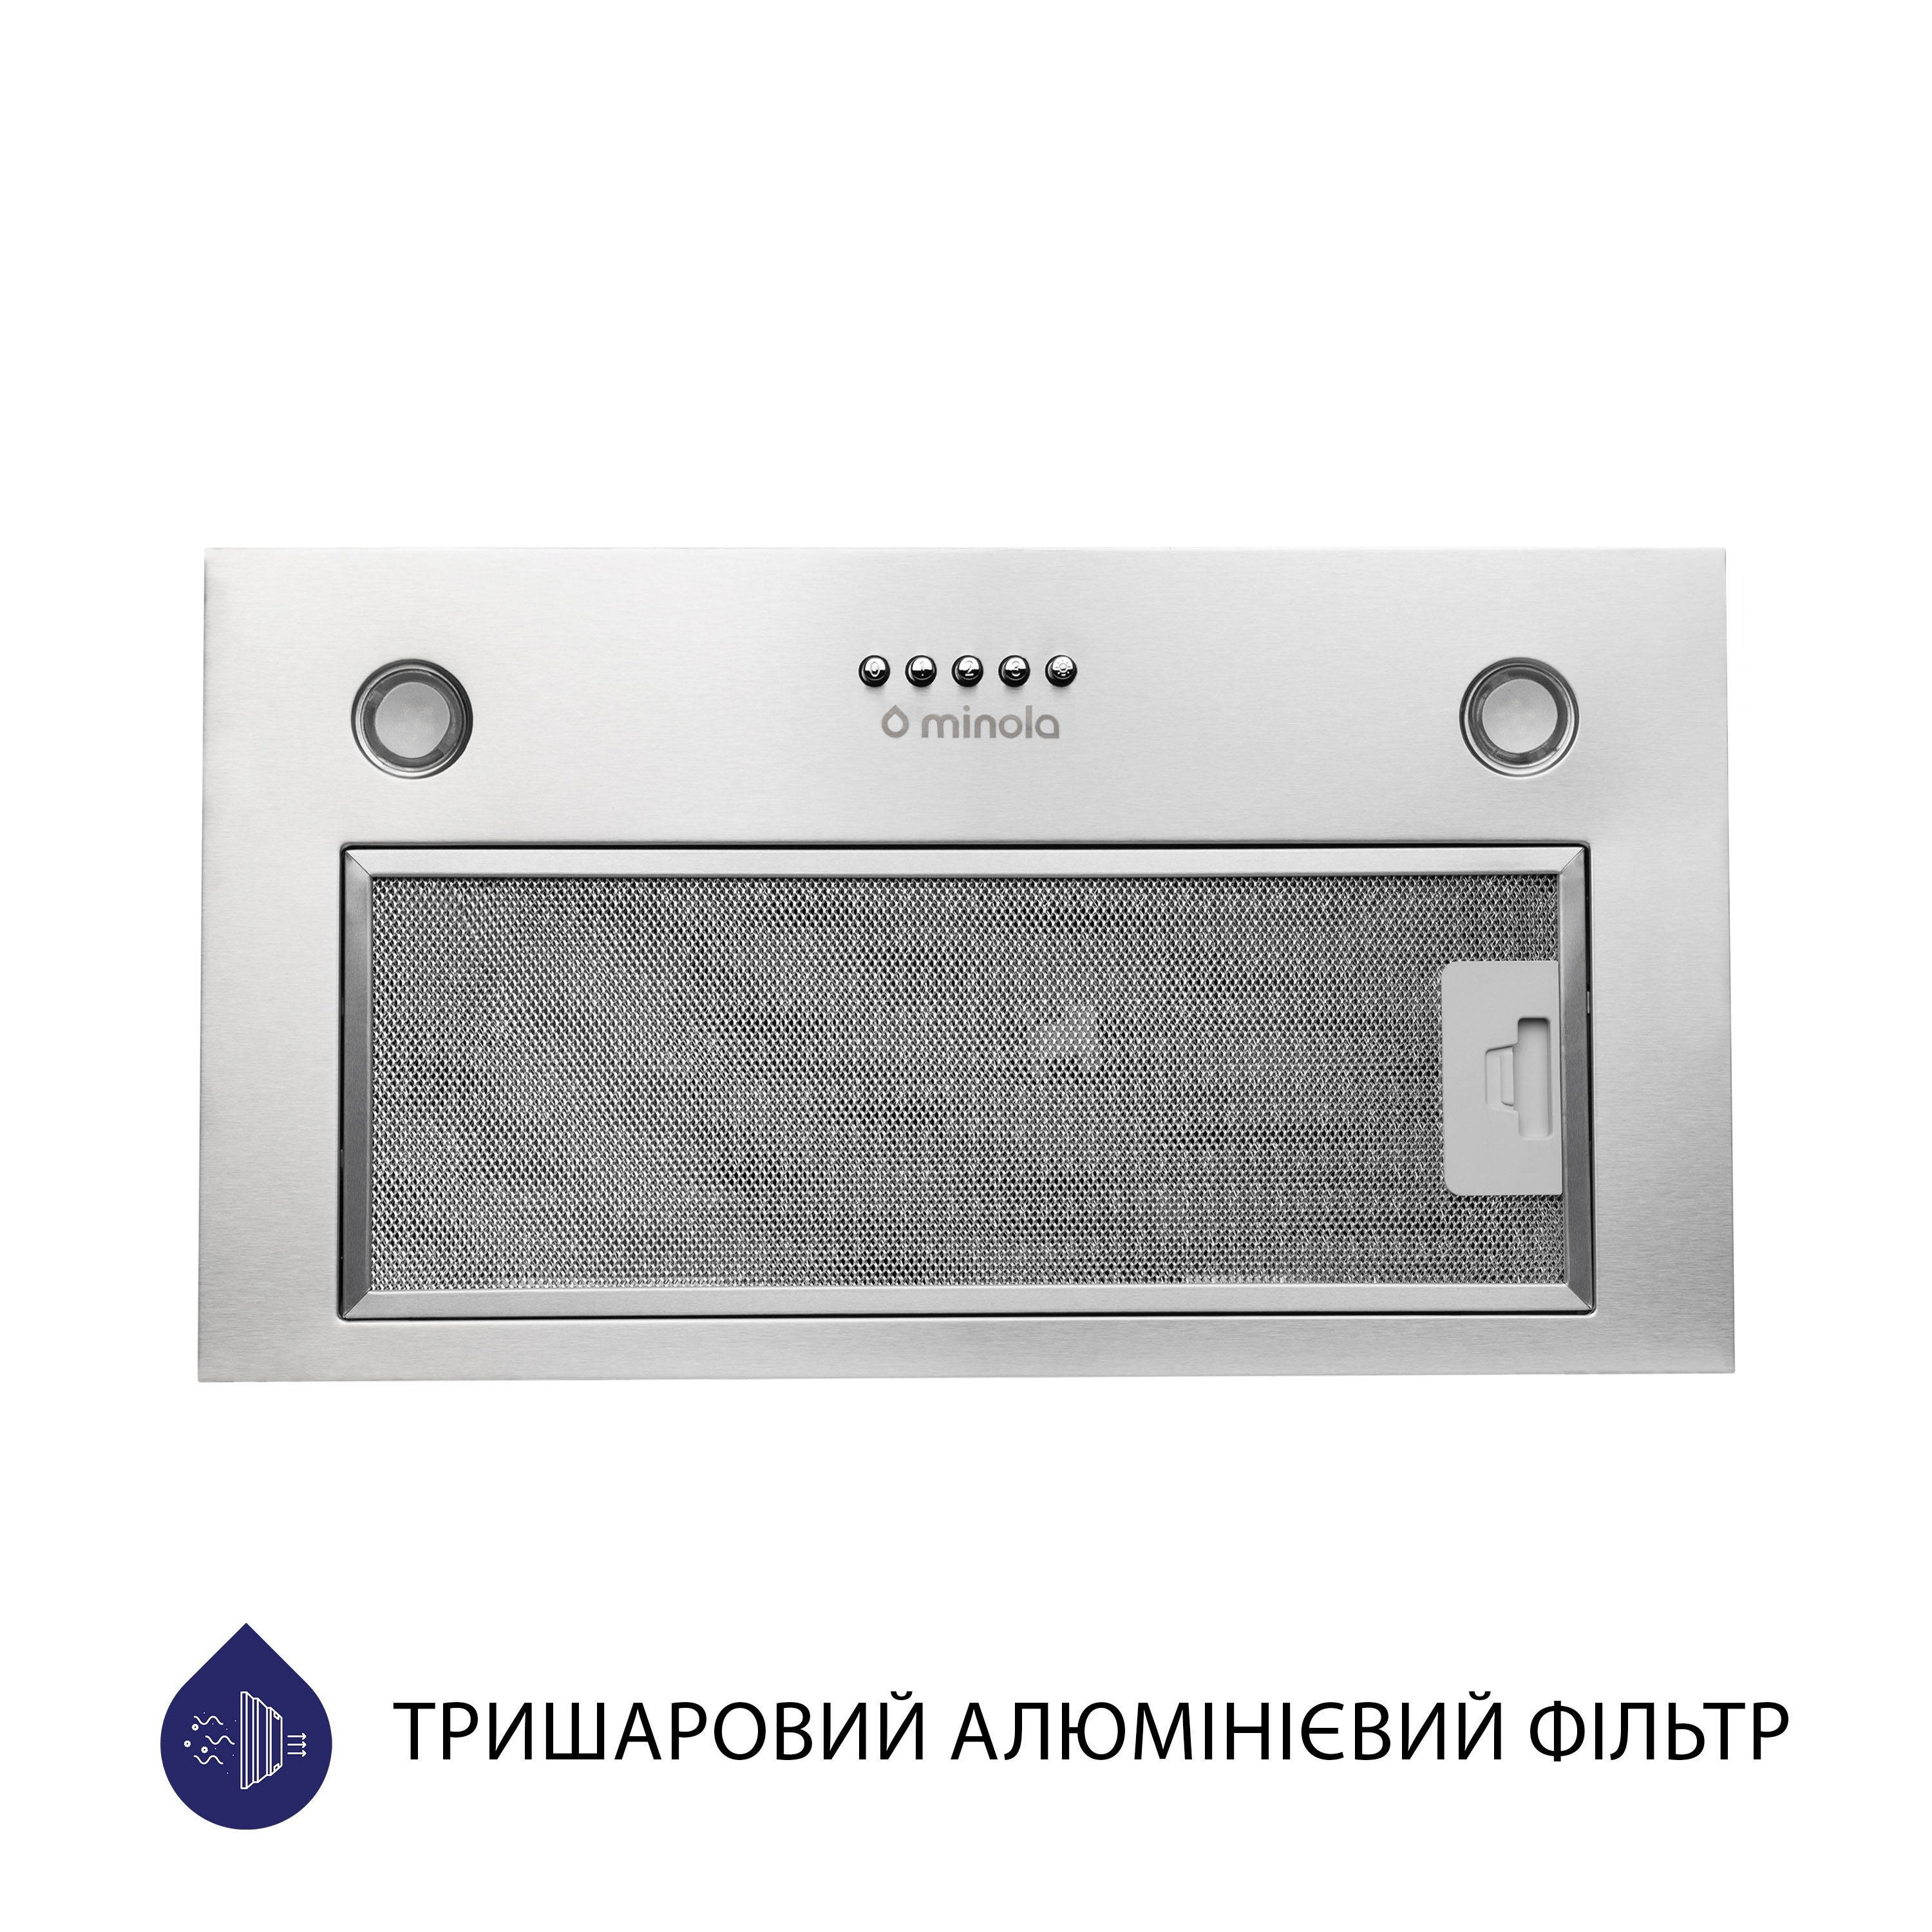 Витяжка кухонная полновстраиваемая Minola HBI 5227 I 700 LED цена 3059.00 грн - фотография 2